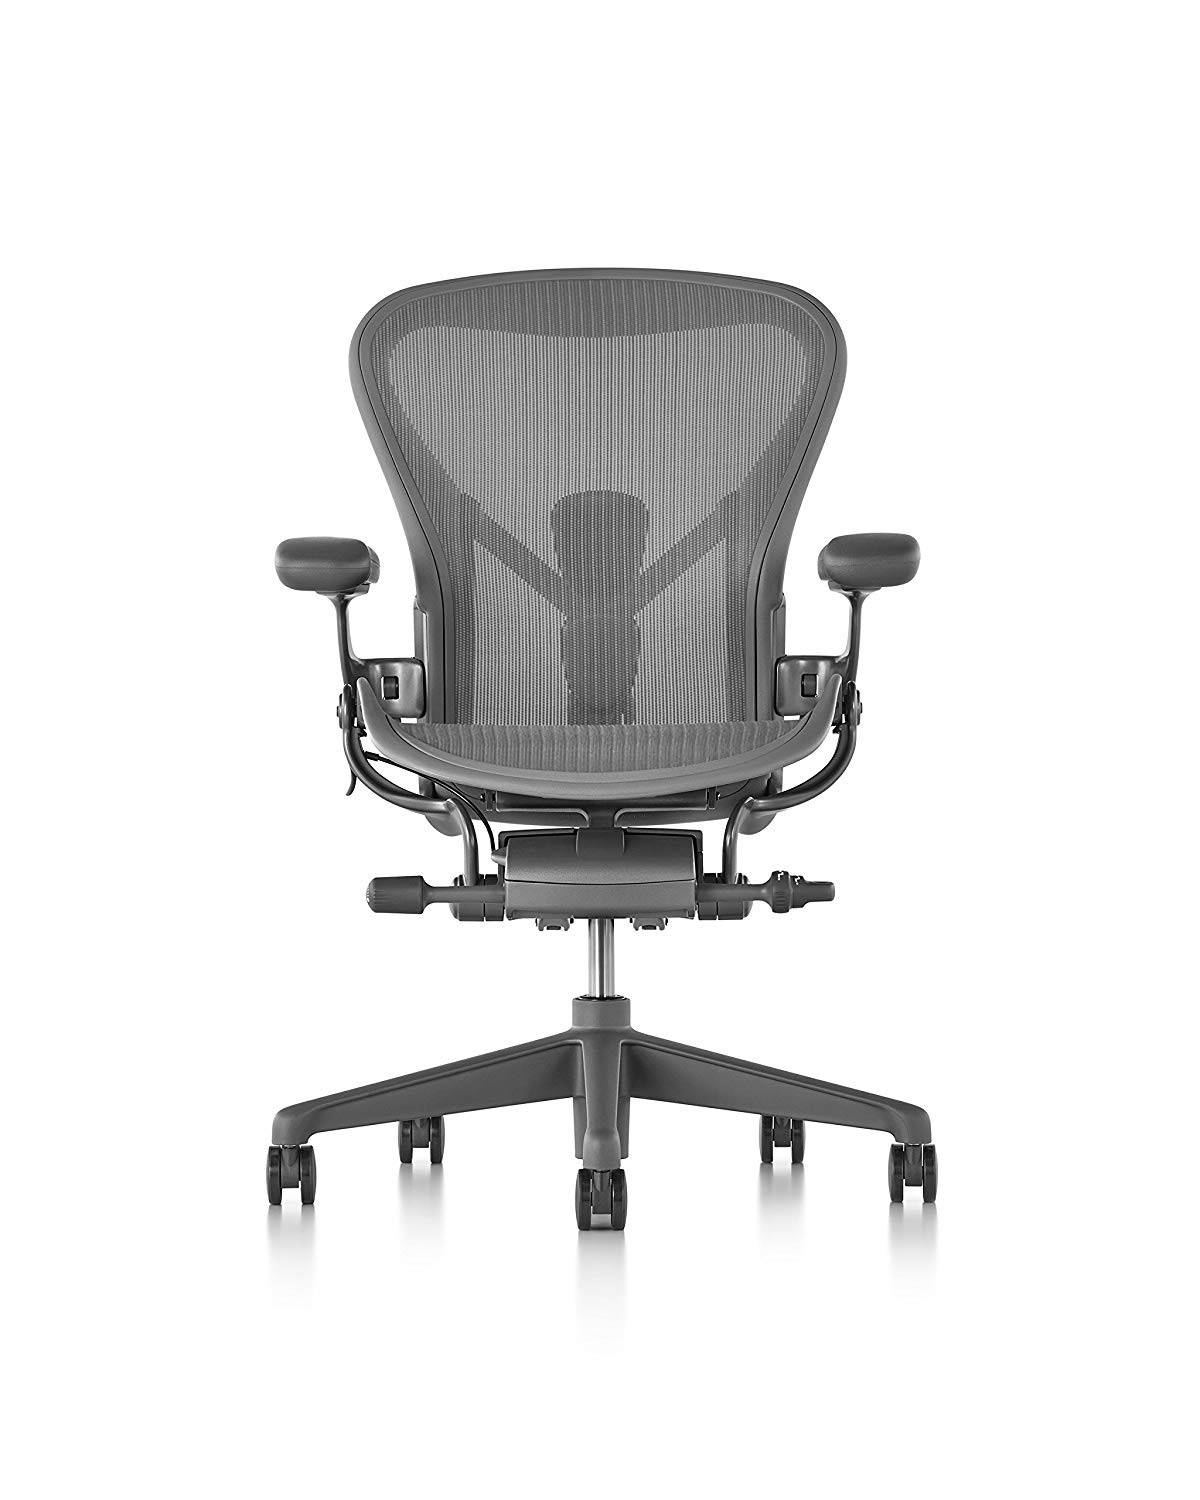 Best ideas about Aeron Chair Sizes
. Save or Pin Herman Miller AER1B23DWALPVPRSNADVPBBDVP B Size Aeron Now.